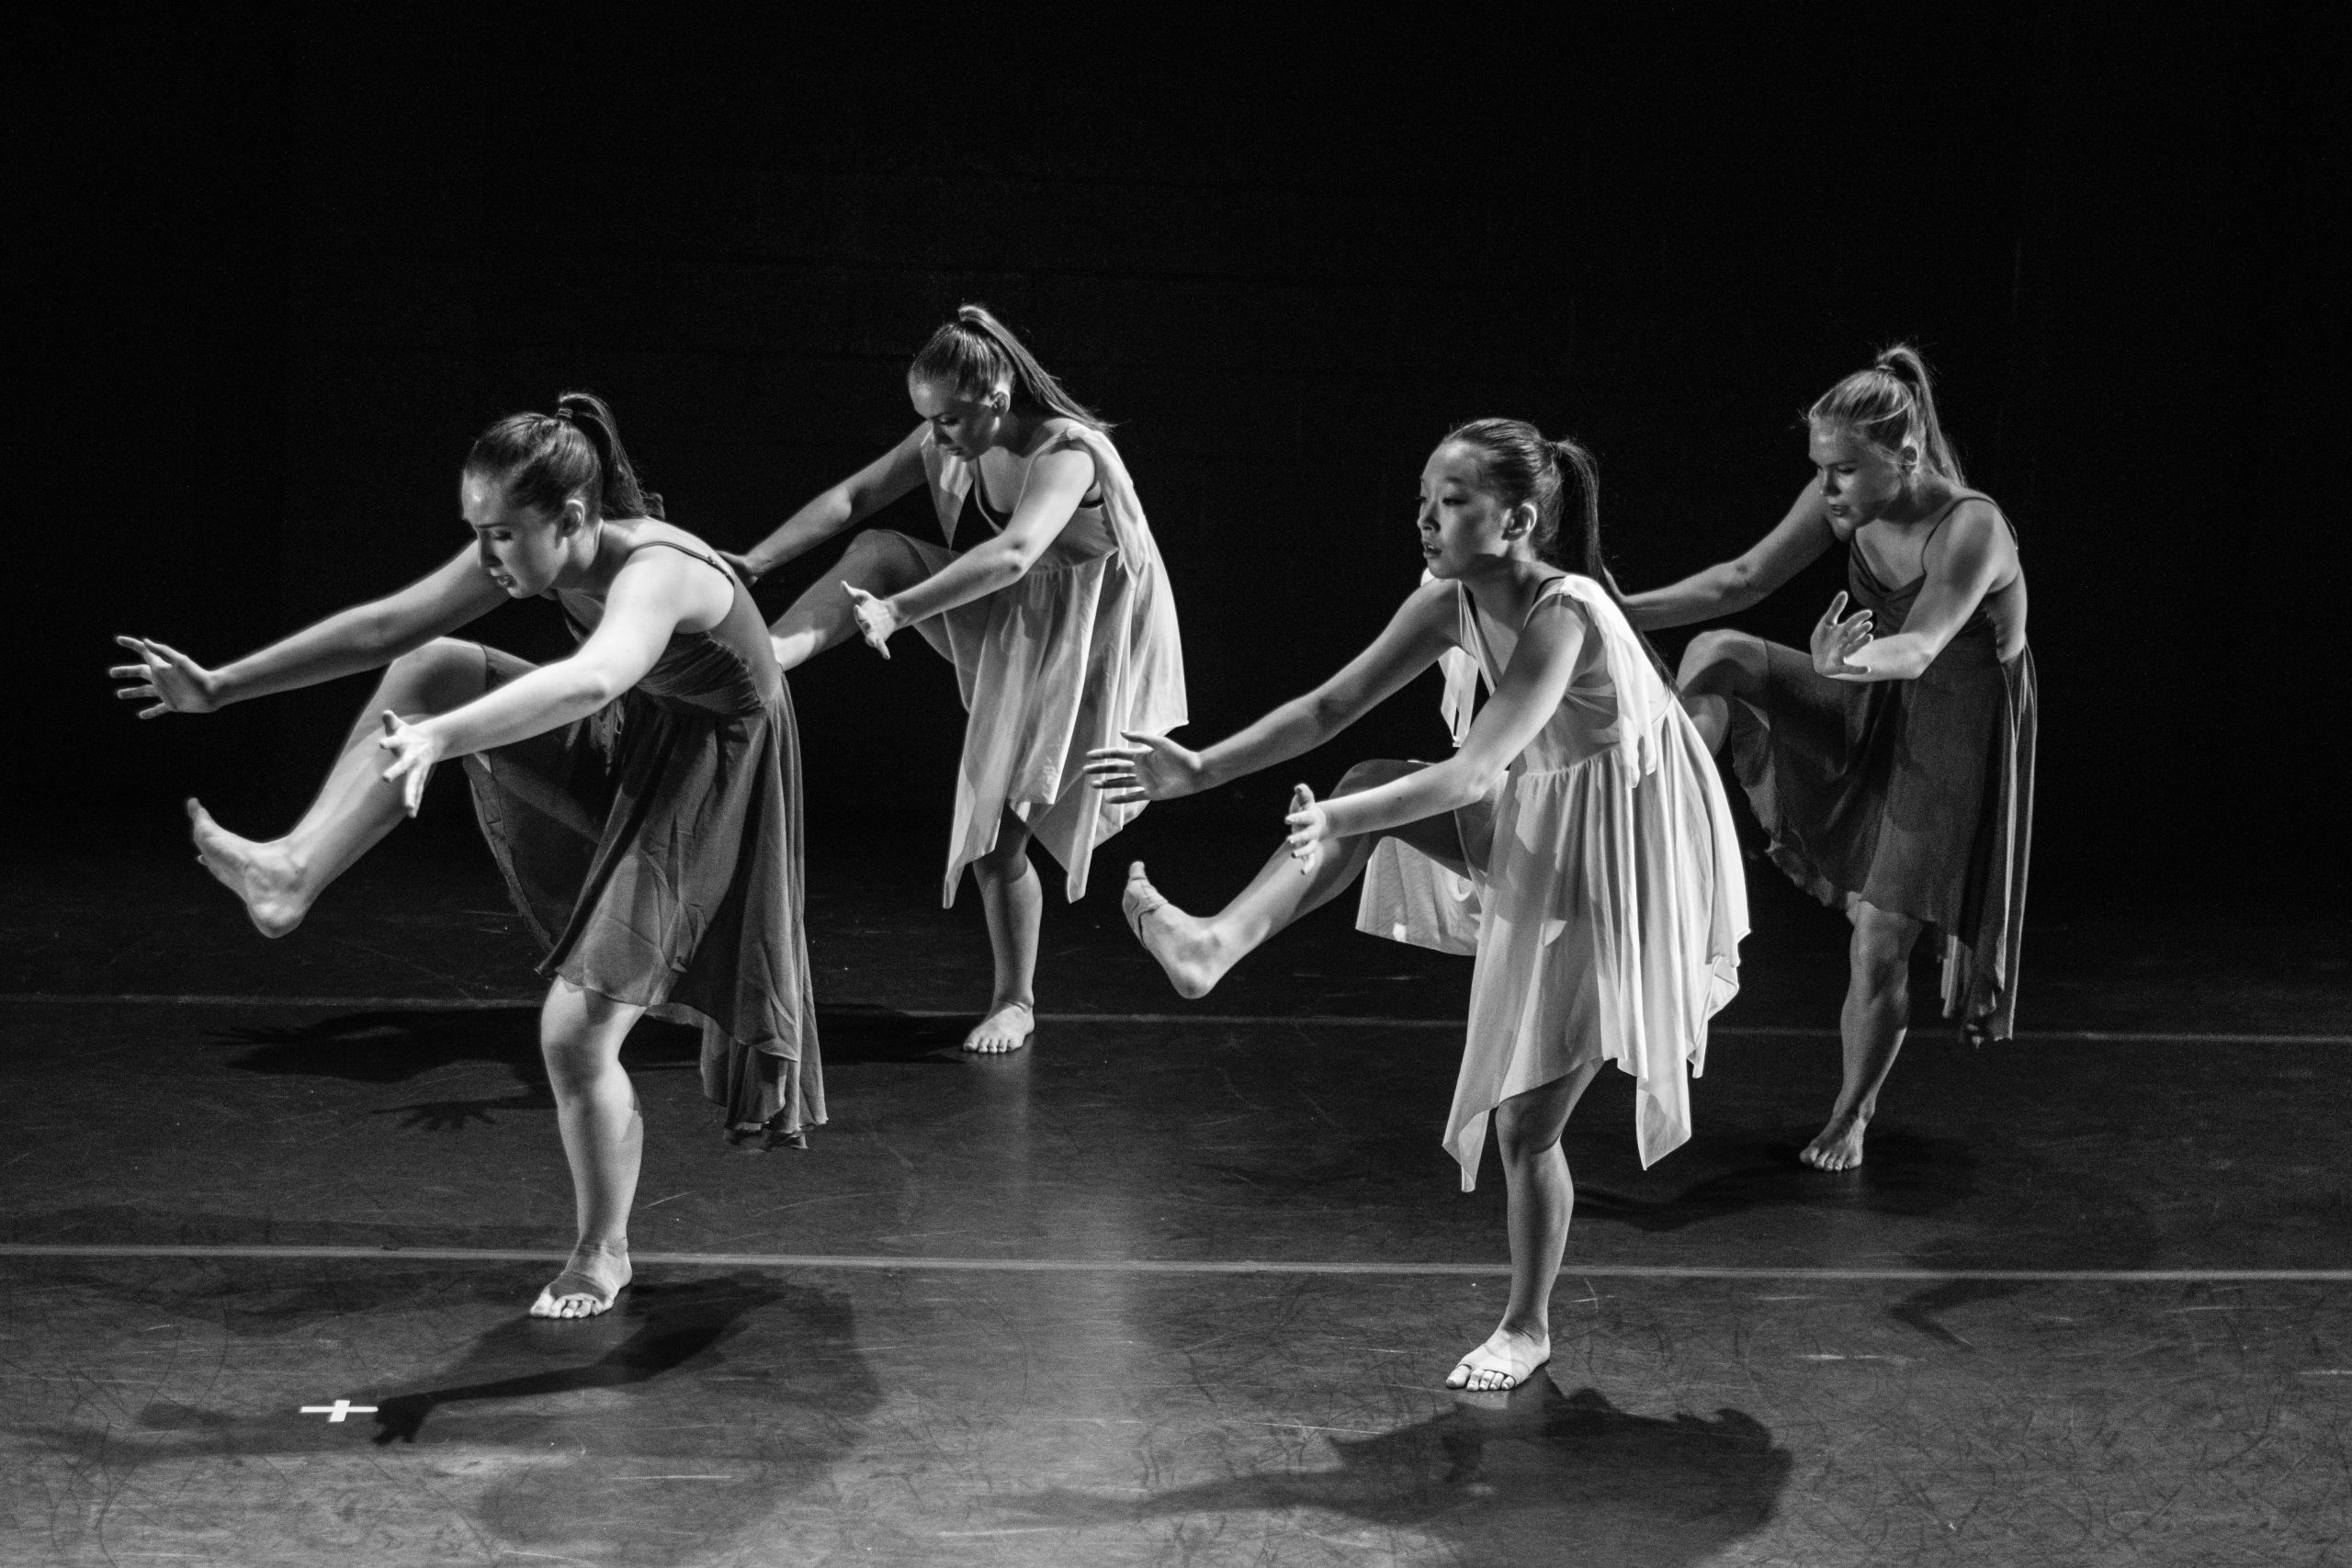 four women dancing grayscale photography